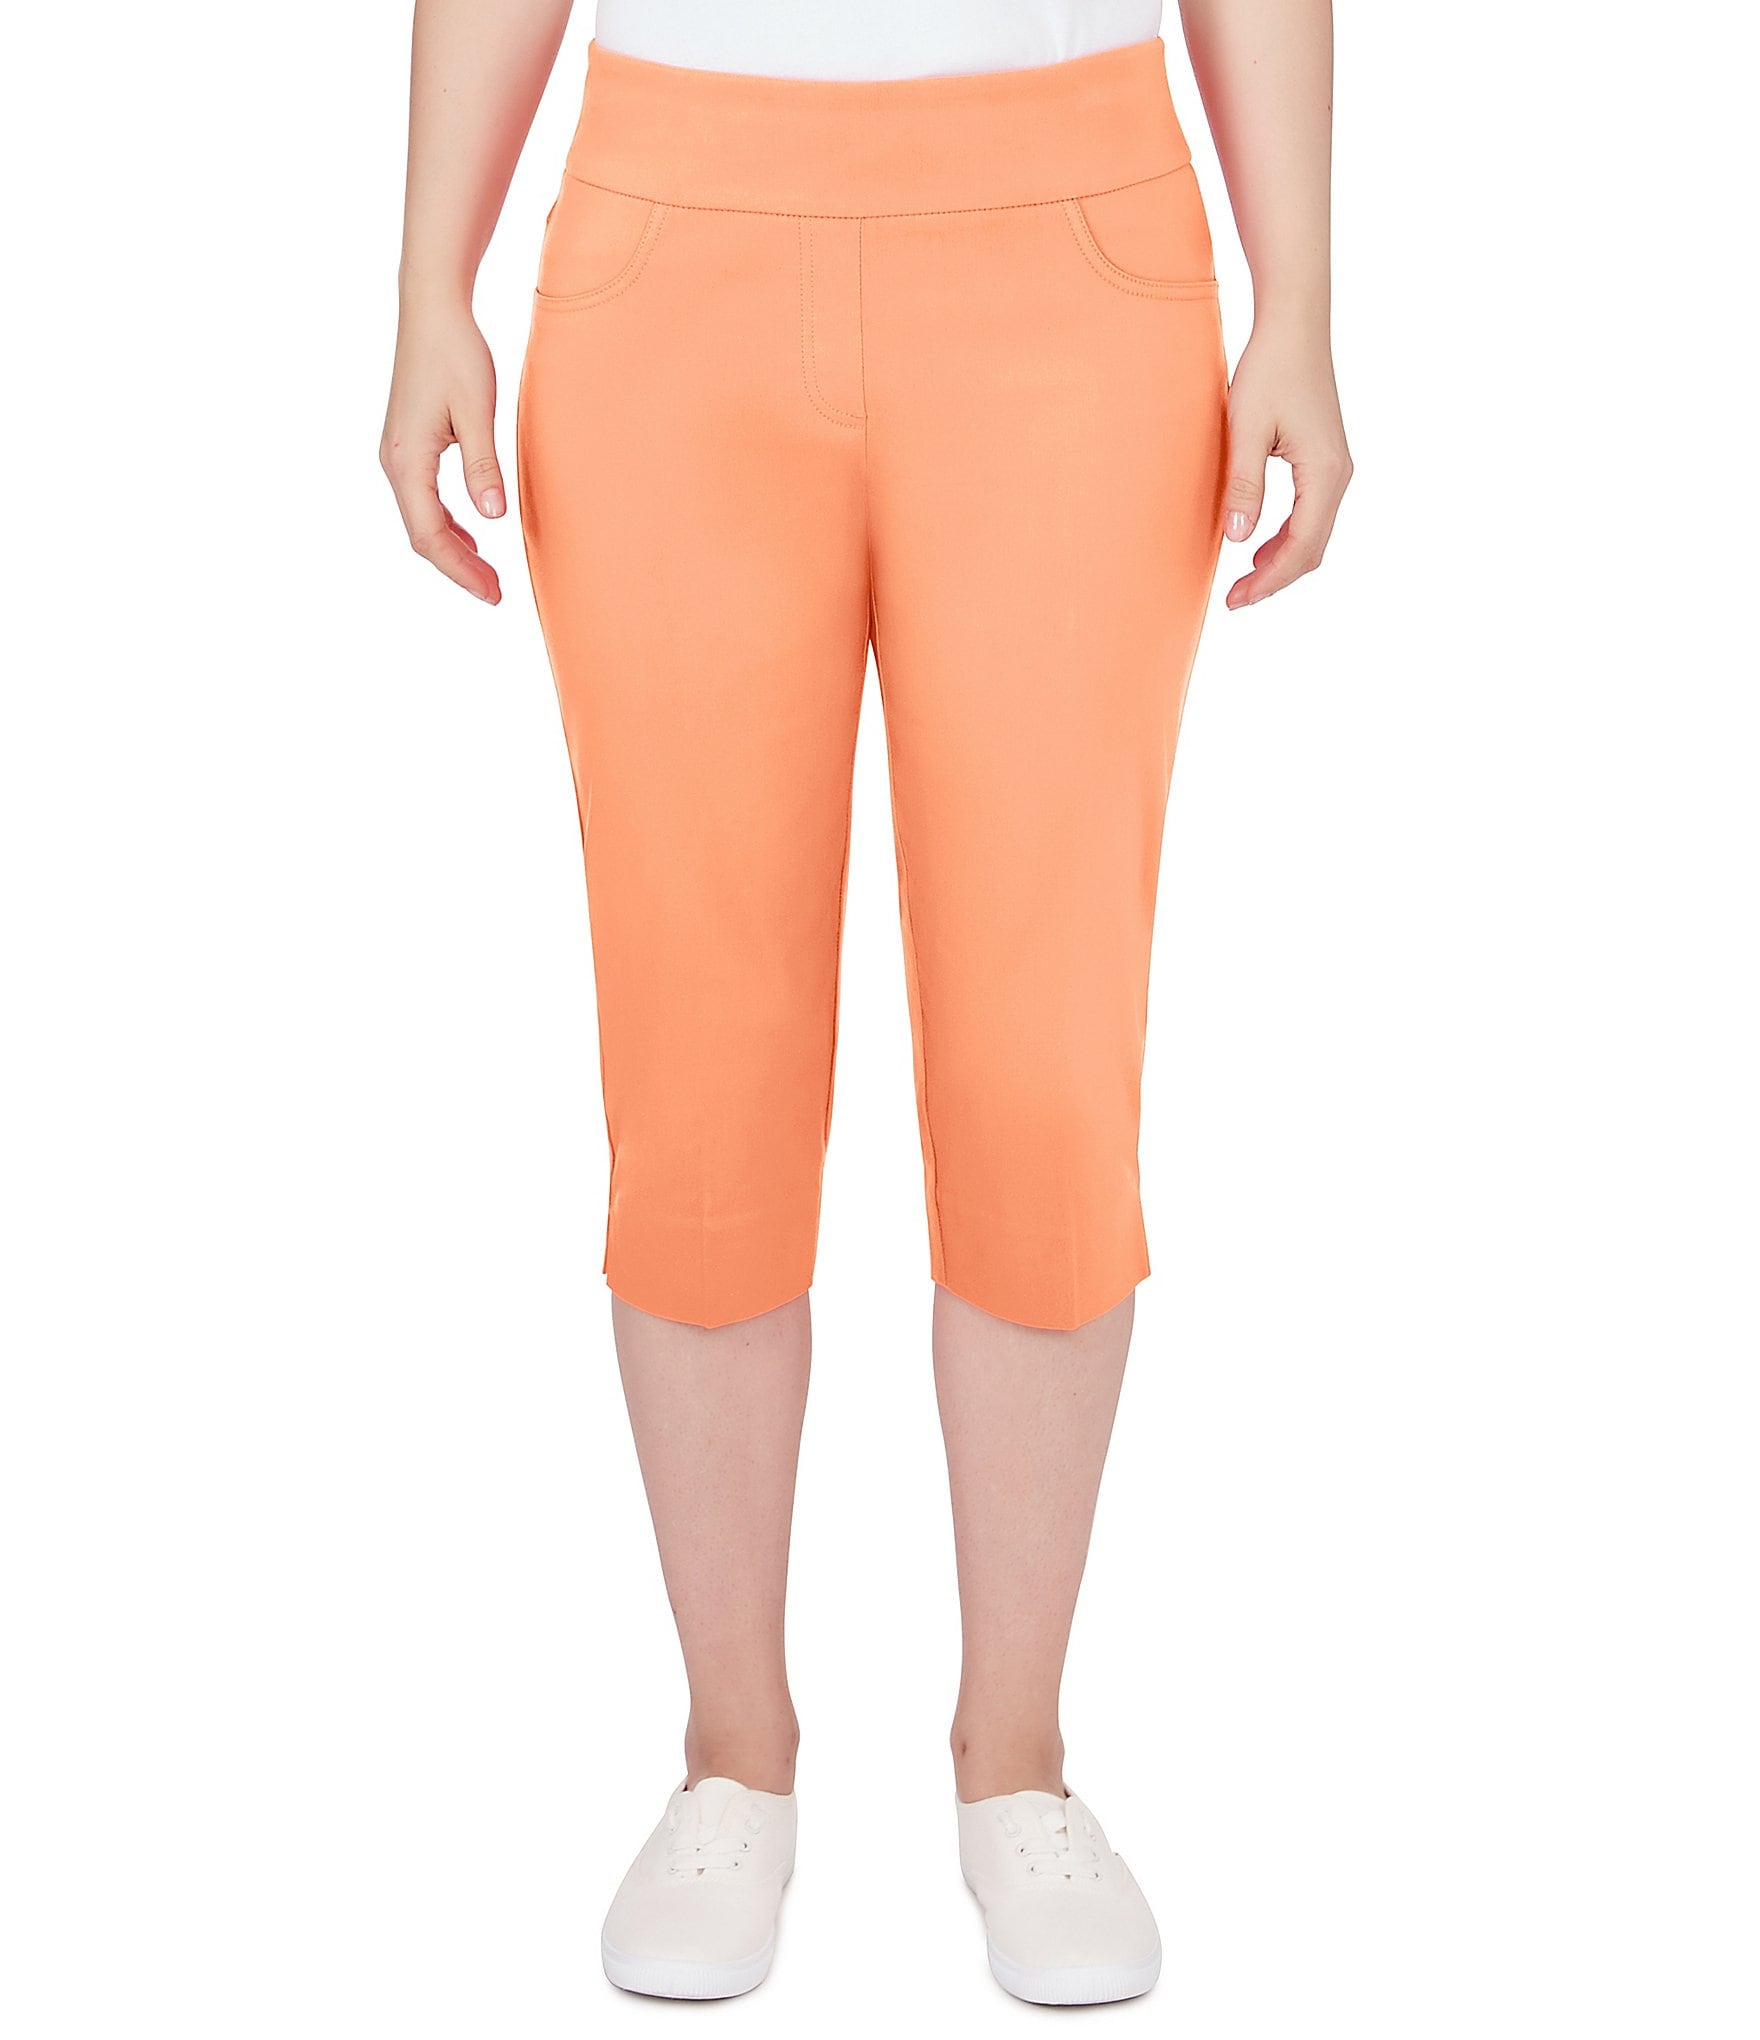 Orange Women's Casual & Dress Pants